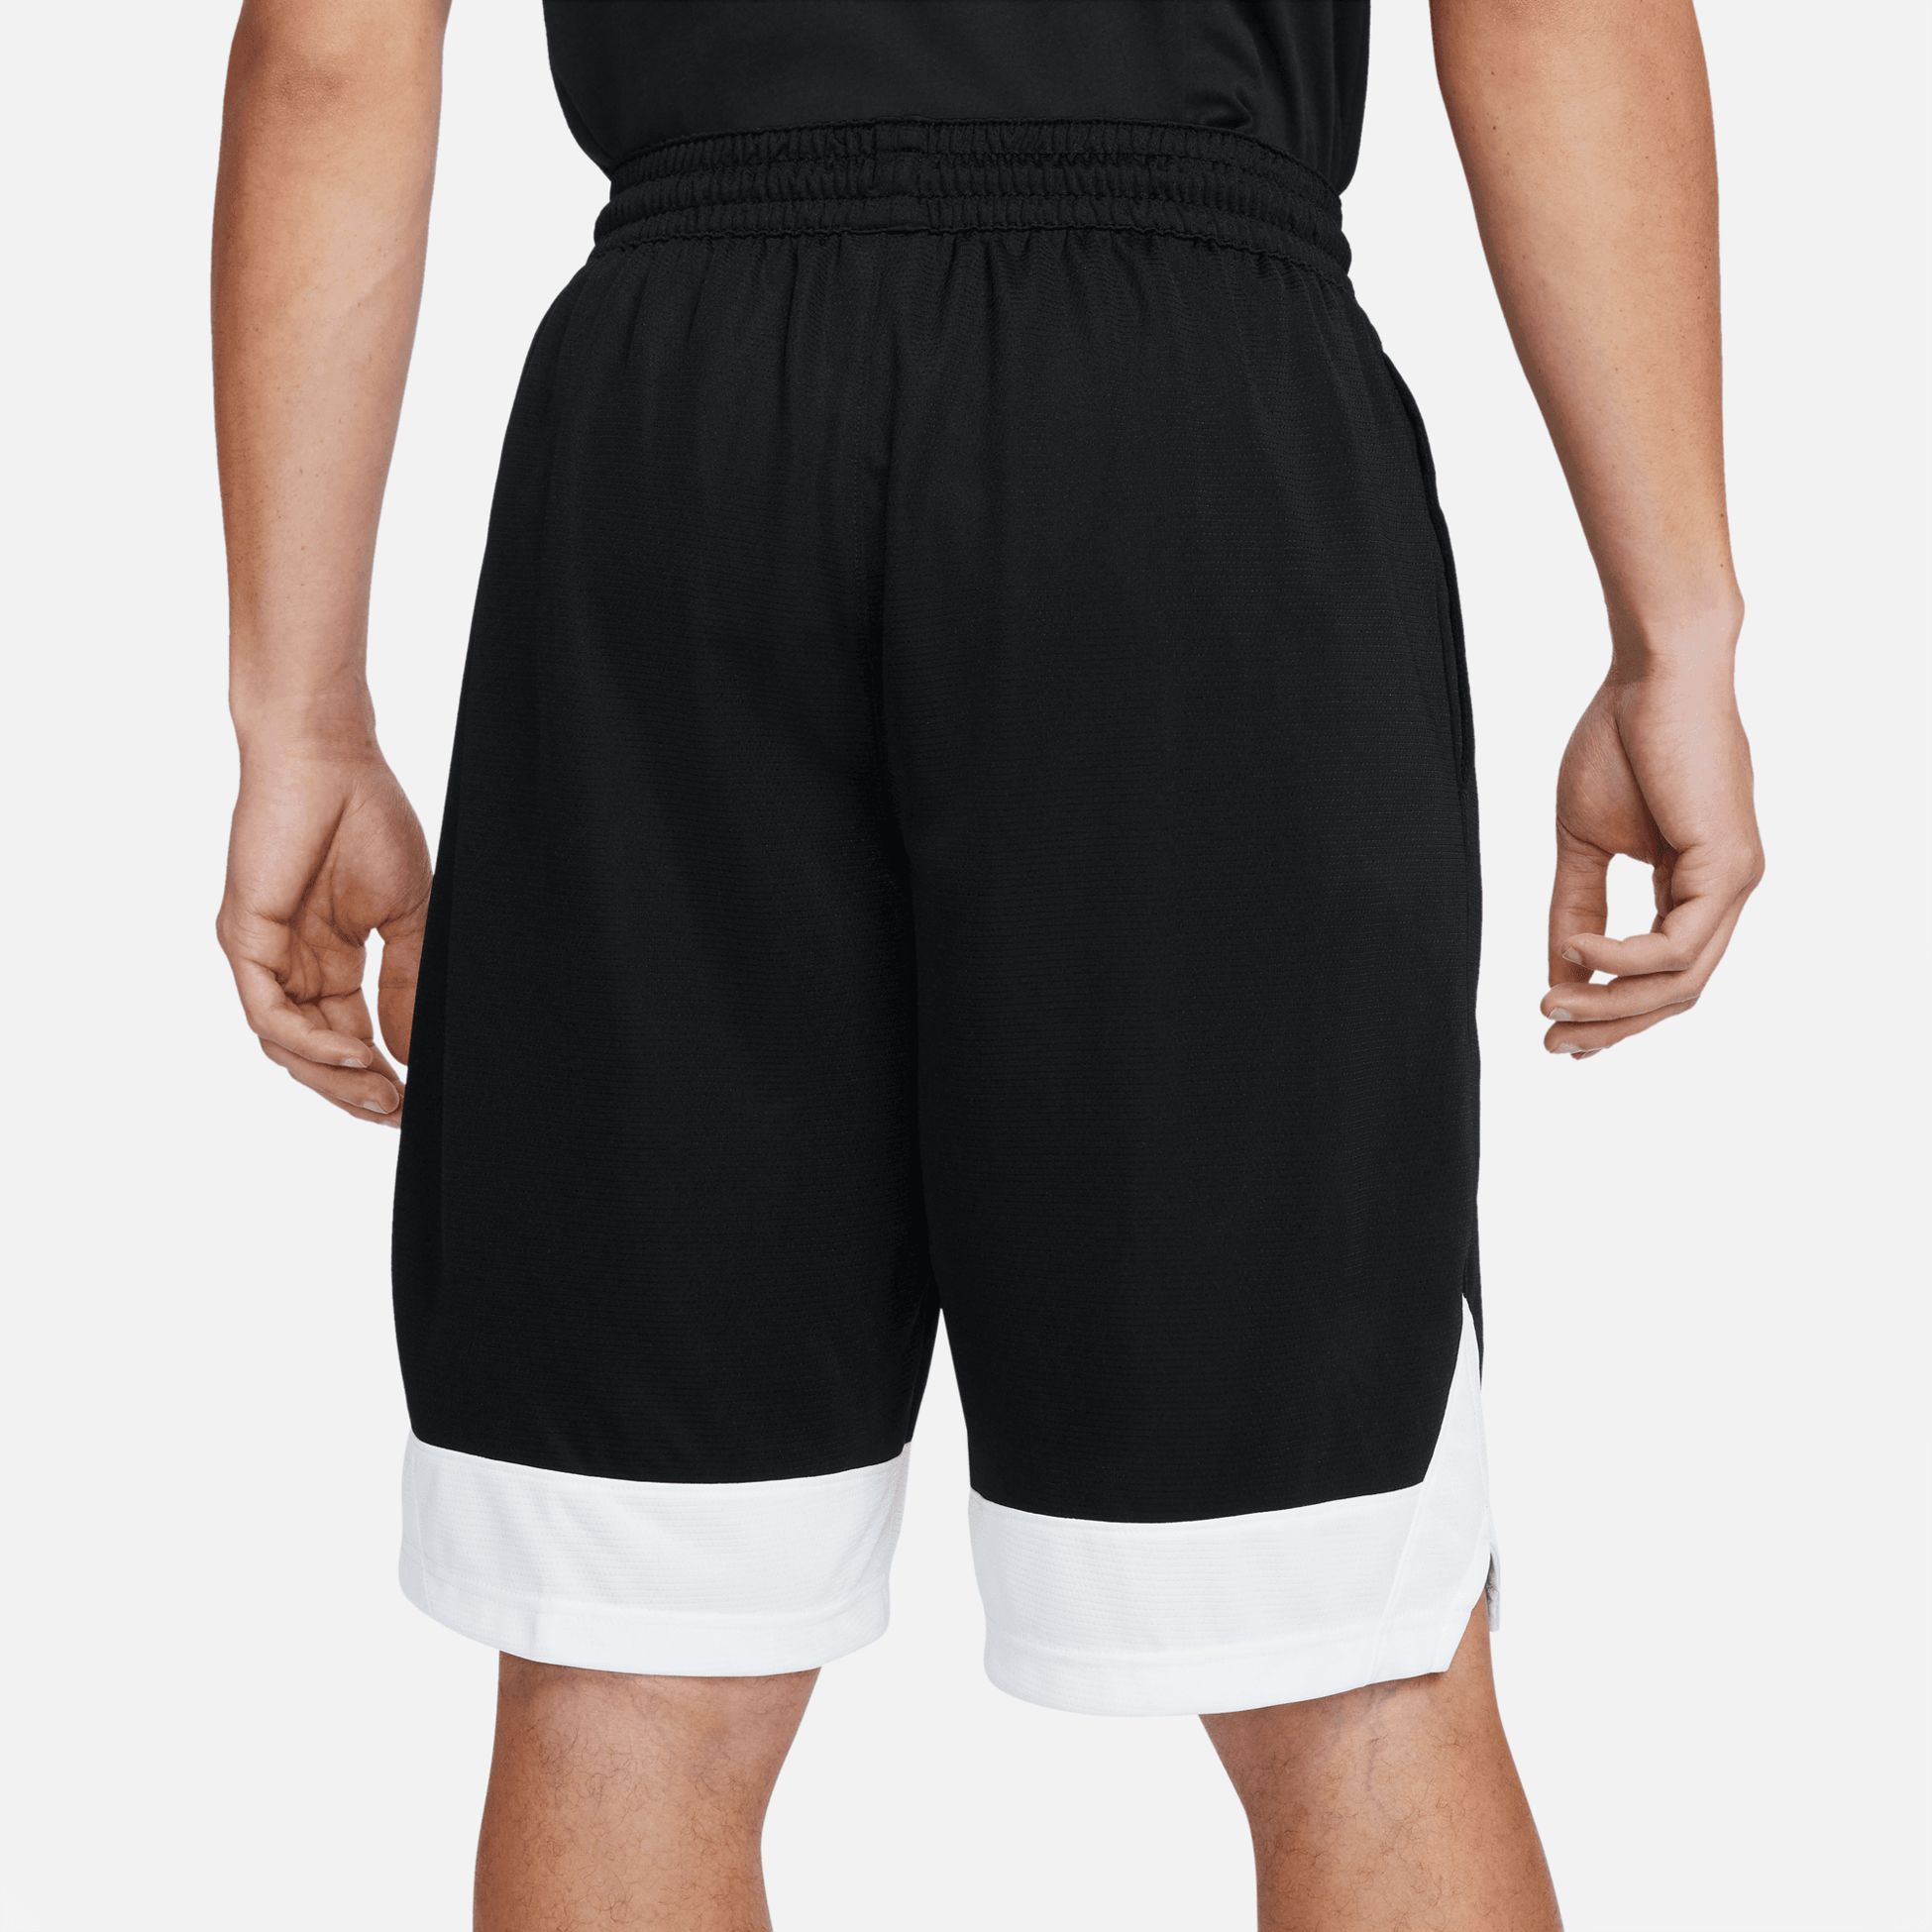 NIKE, Nike Dri-FIT Icon Men's Basketball